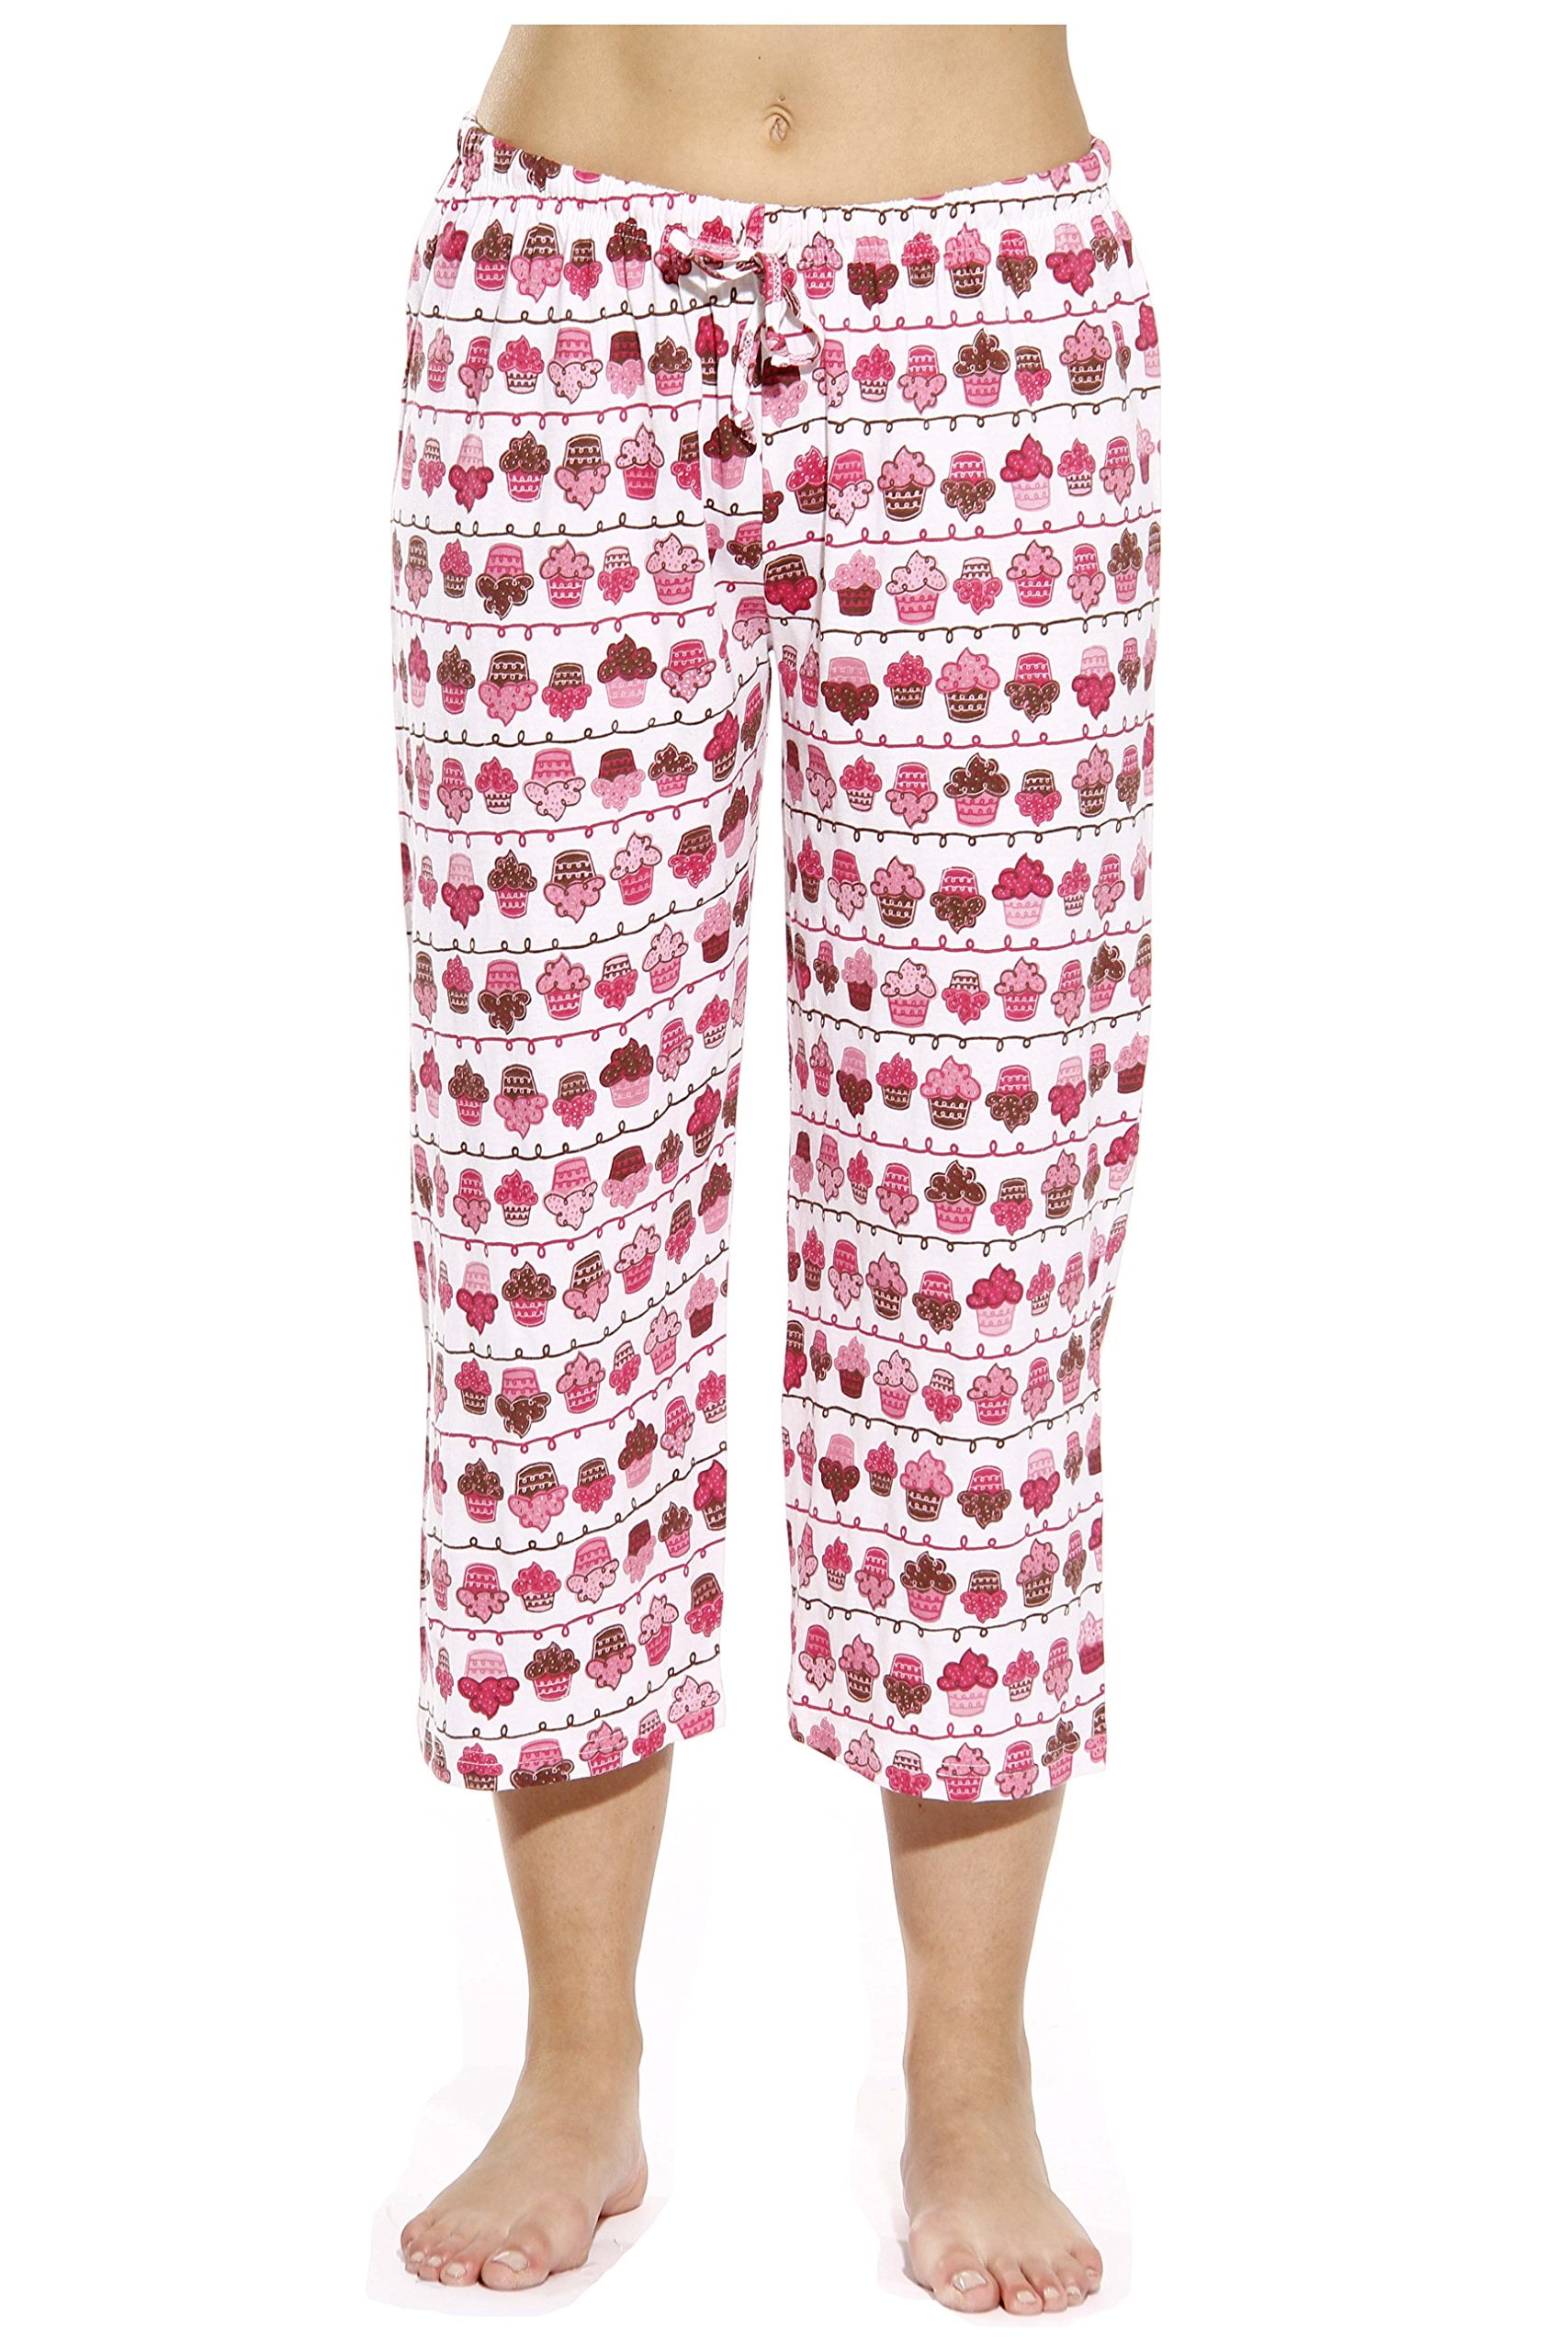 GuliriFe Women's Cotton Pyjama Bottoms Sleepwear Trousers Long Sleep Trousers Checked